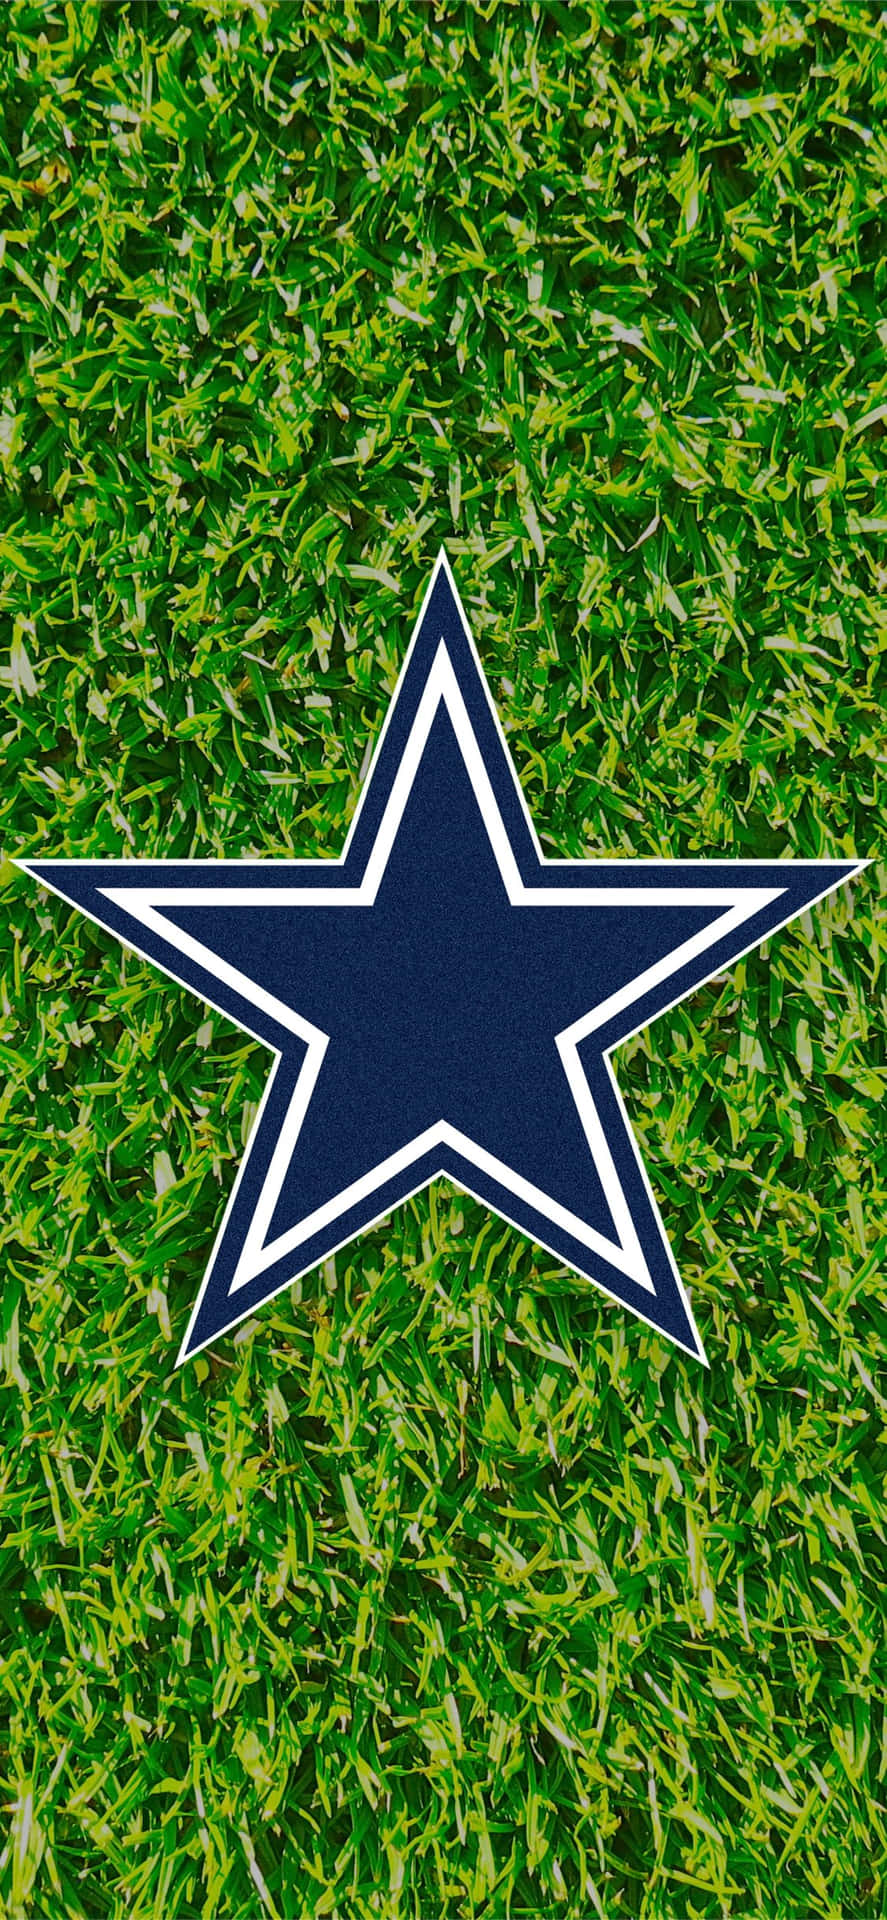 Fresh Grass And Logo Of Dallas Cowboys Iphone Wallpaper